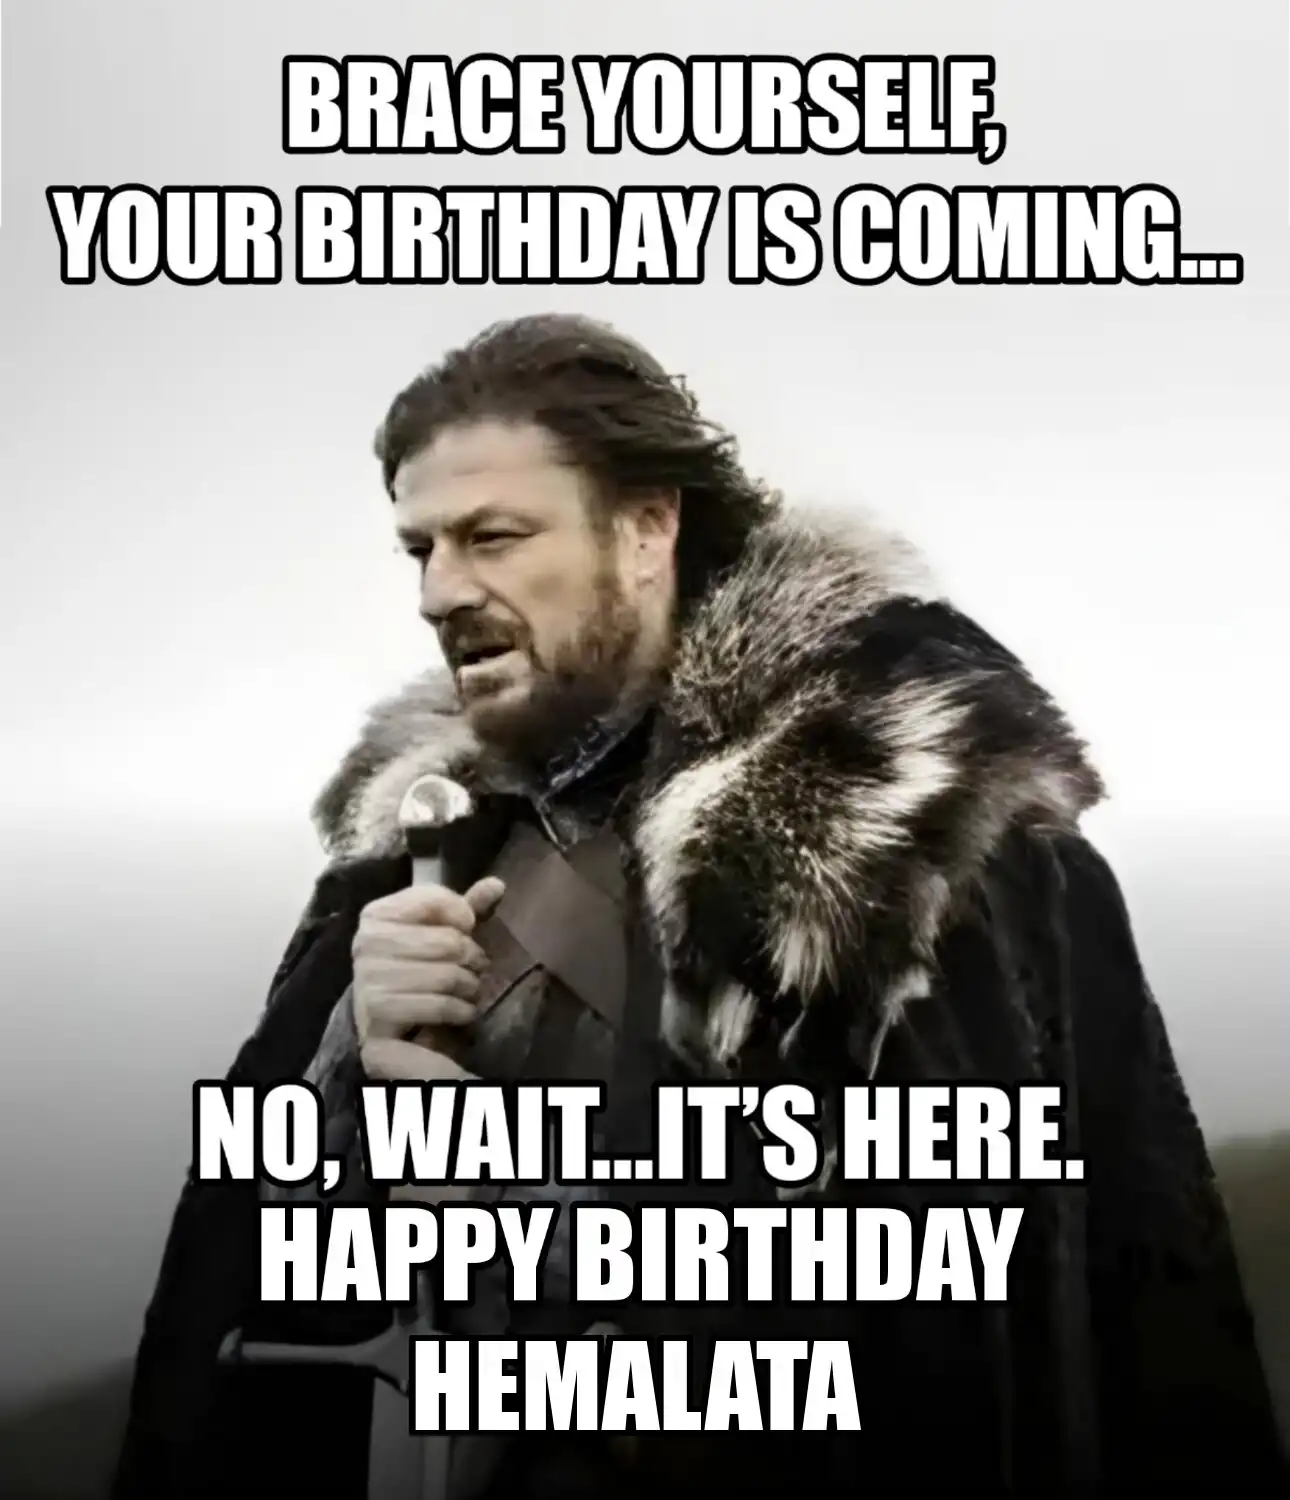 Happy Birthday Hemalata Brace Yourself Your Birthday Is Coming Meme